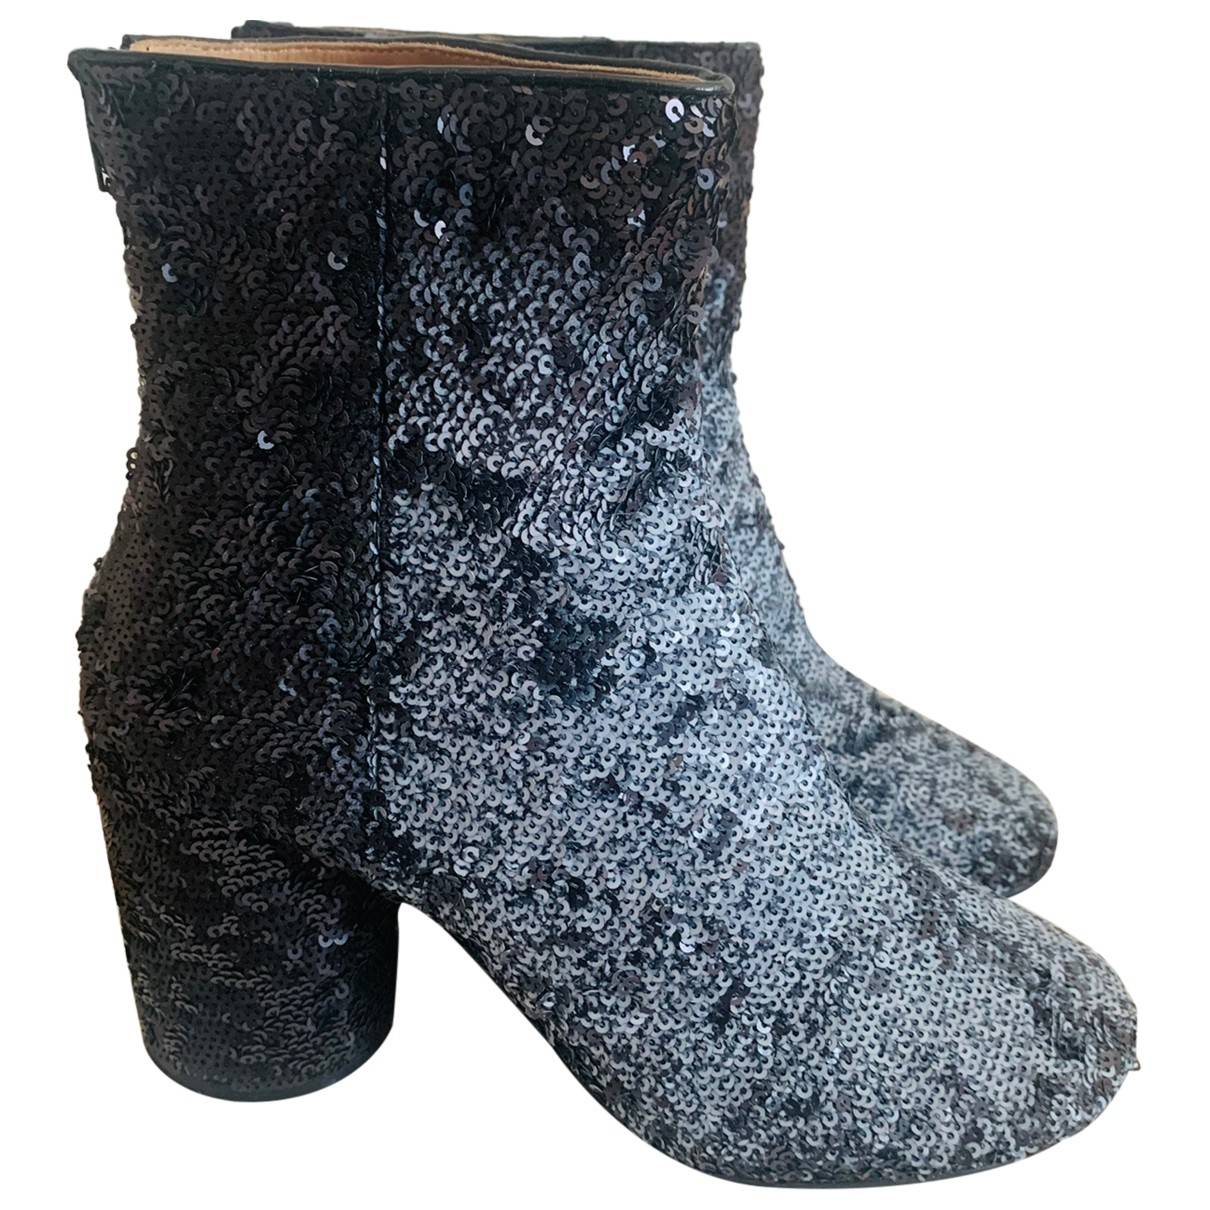 Glitter ankle boots Maison Martin Margiela Black size 39 EU in